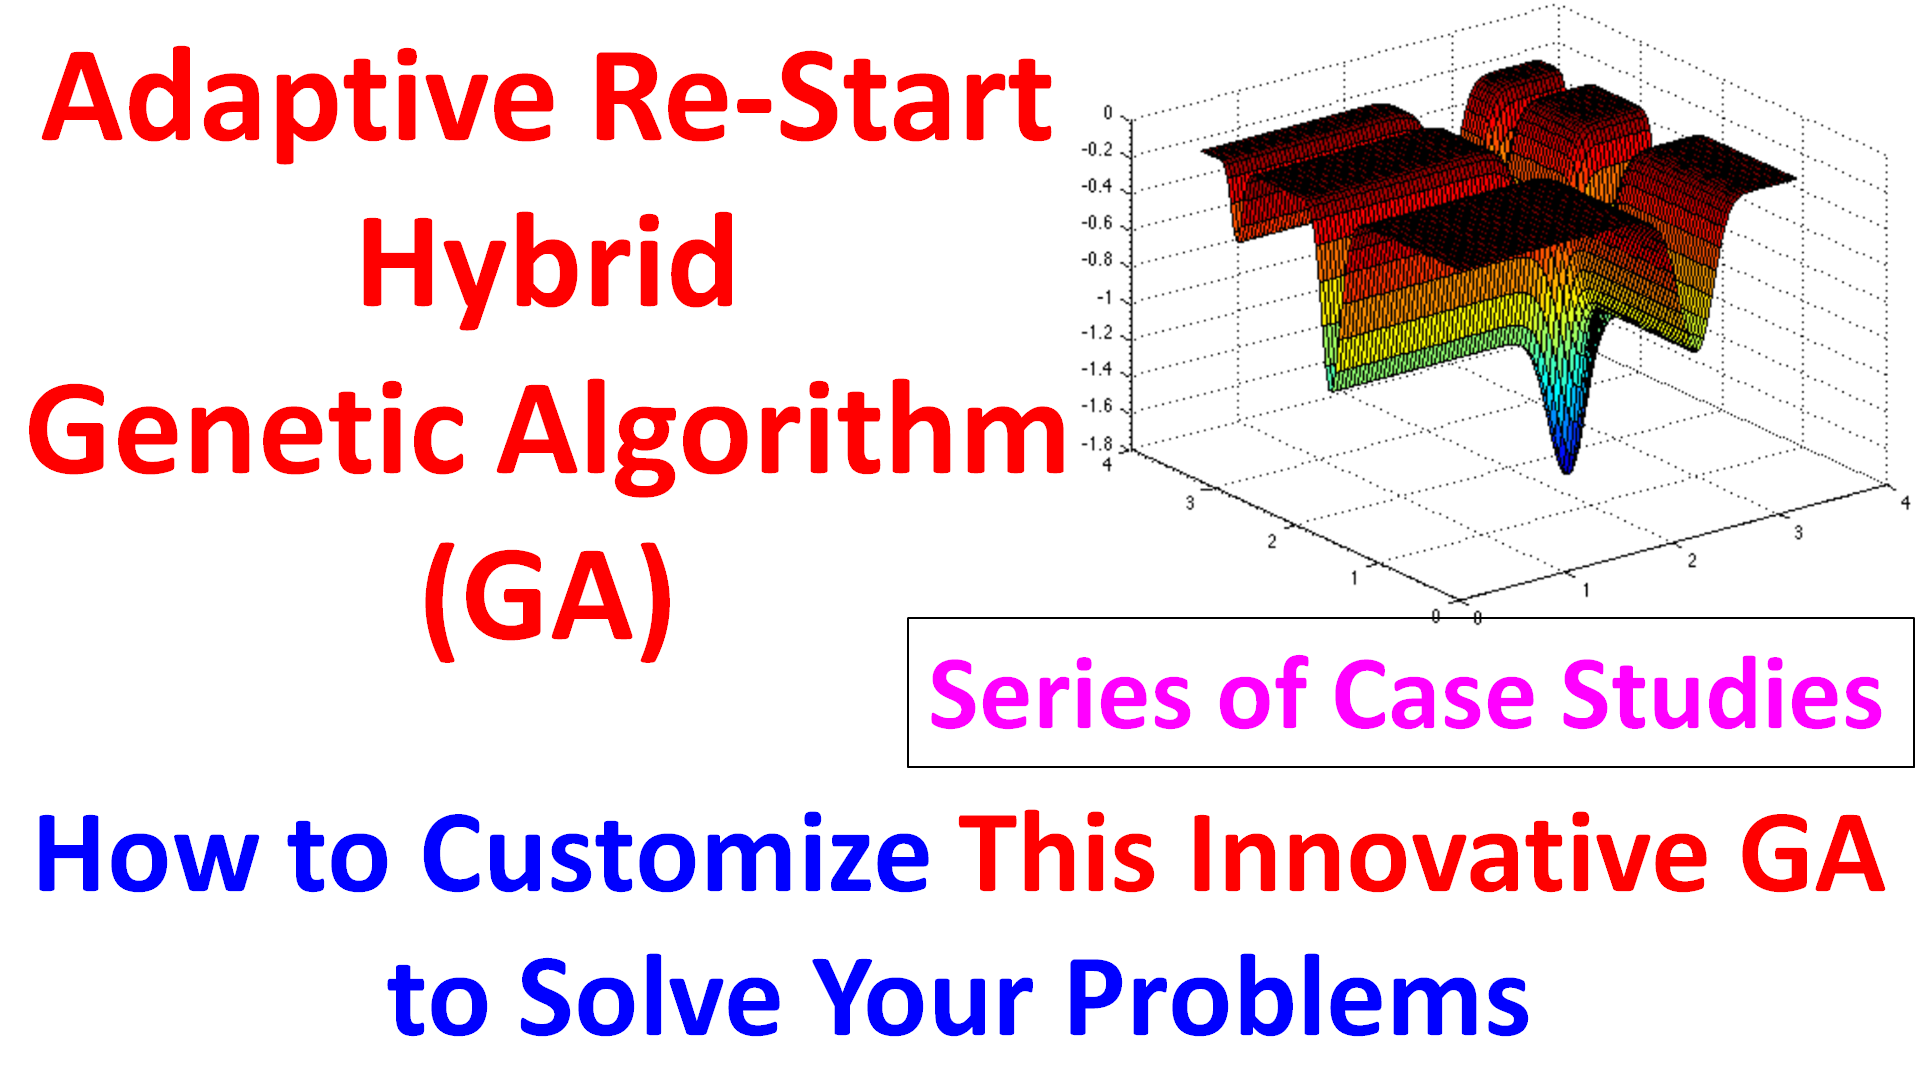 Adaptive Re-Start Hybrid Genetic Algorithm (Test the Performance in Case Studies)